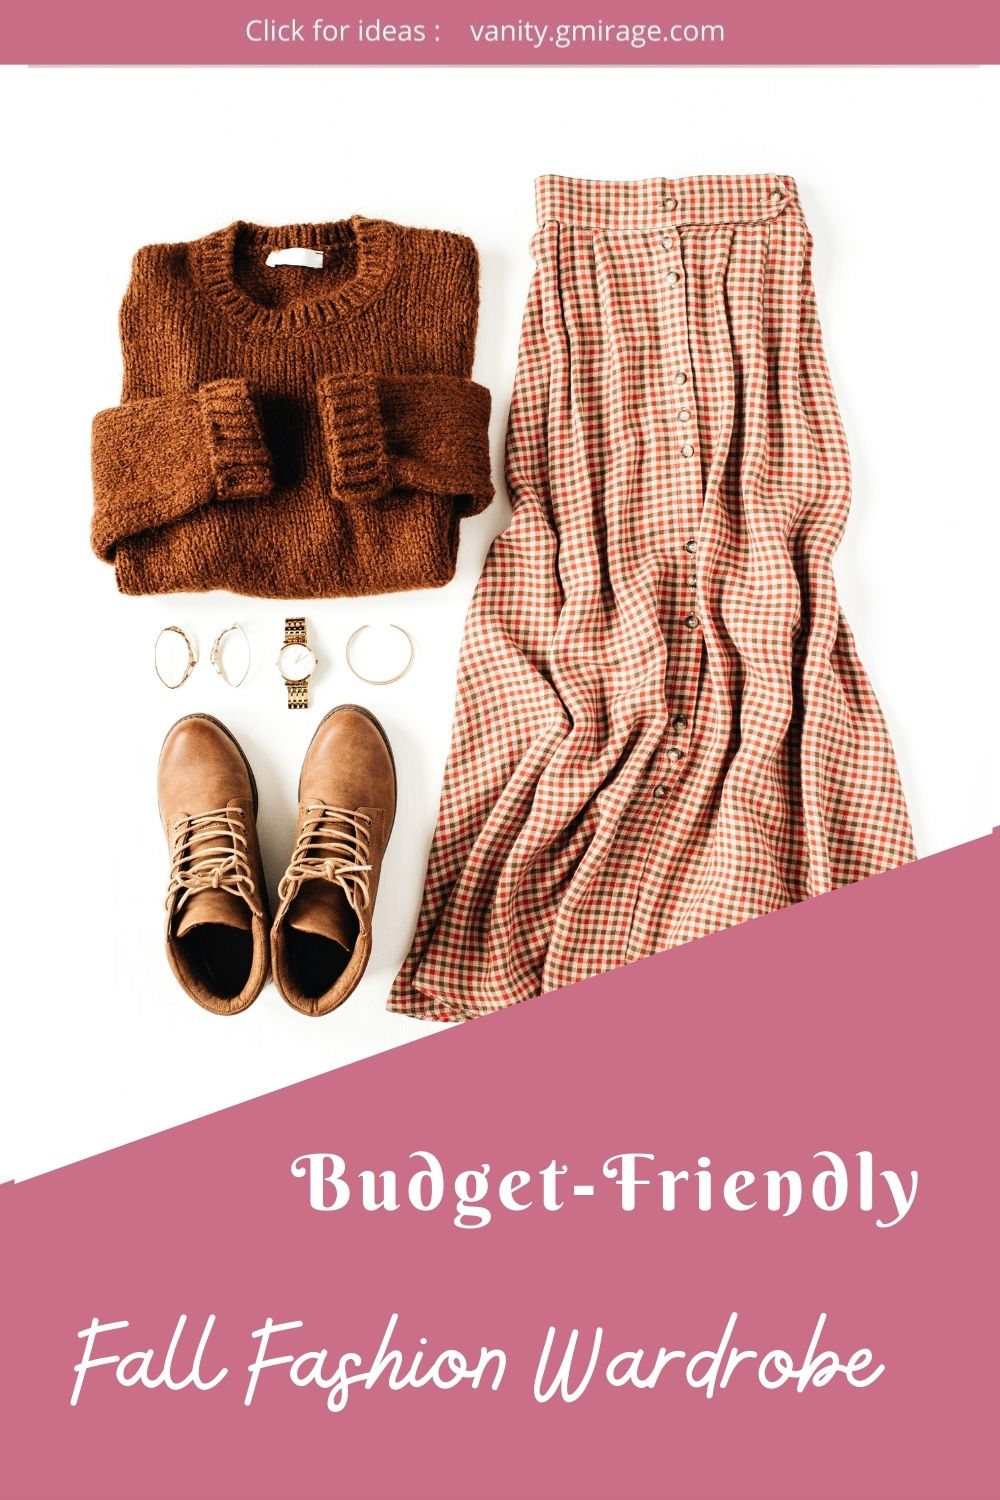 Budget-Friendly Fall Fashion Wardrobe